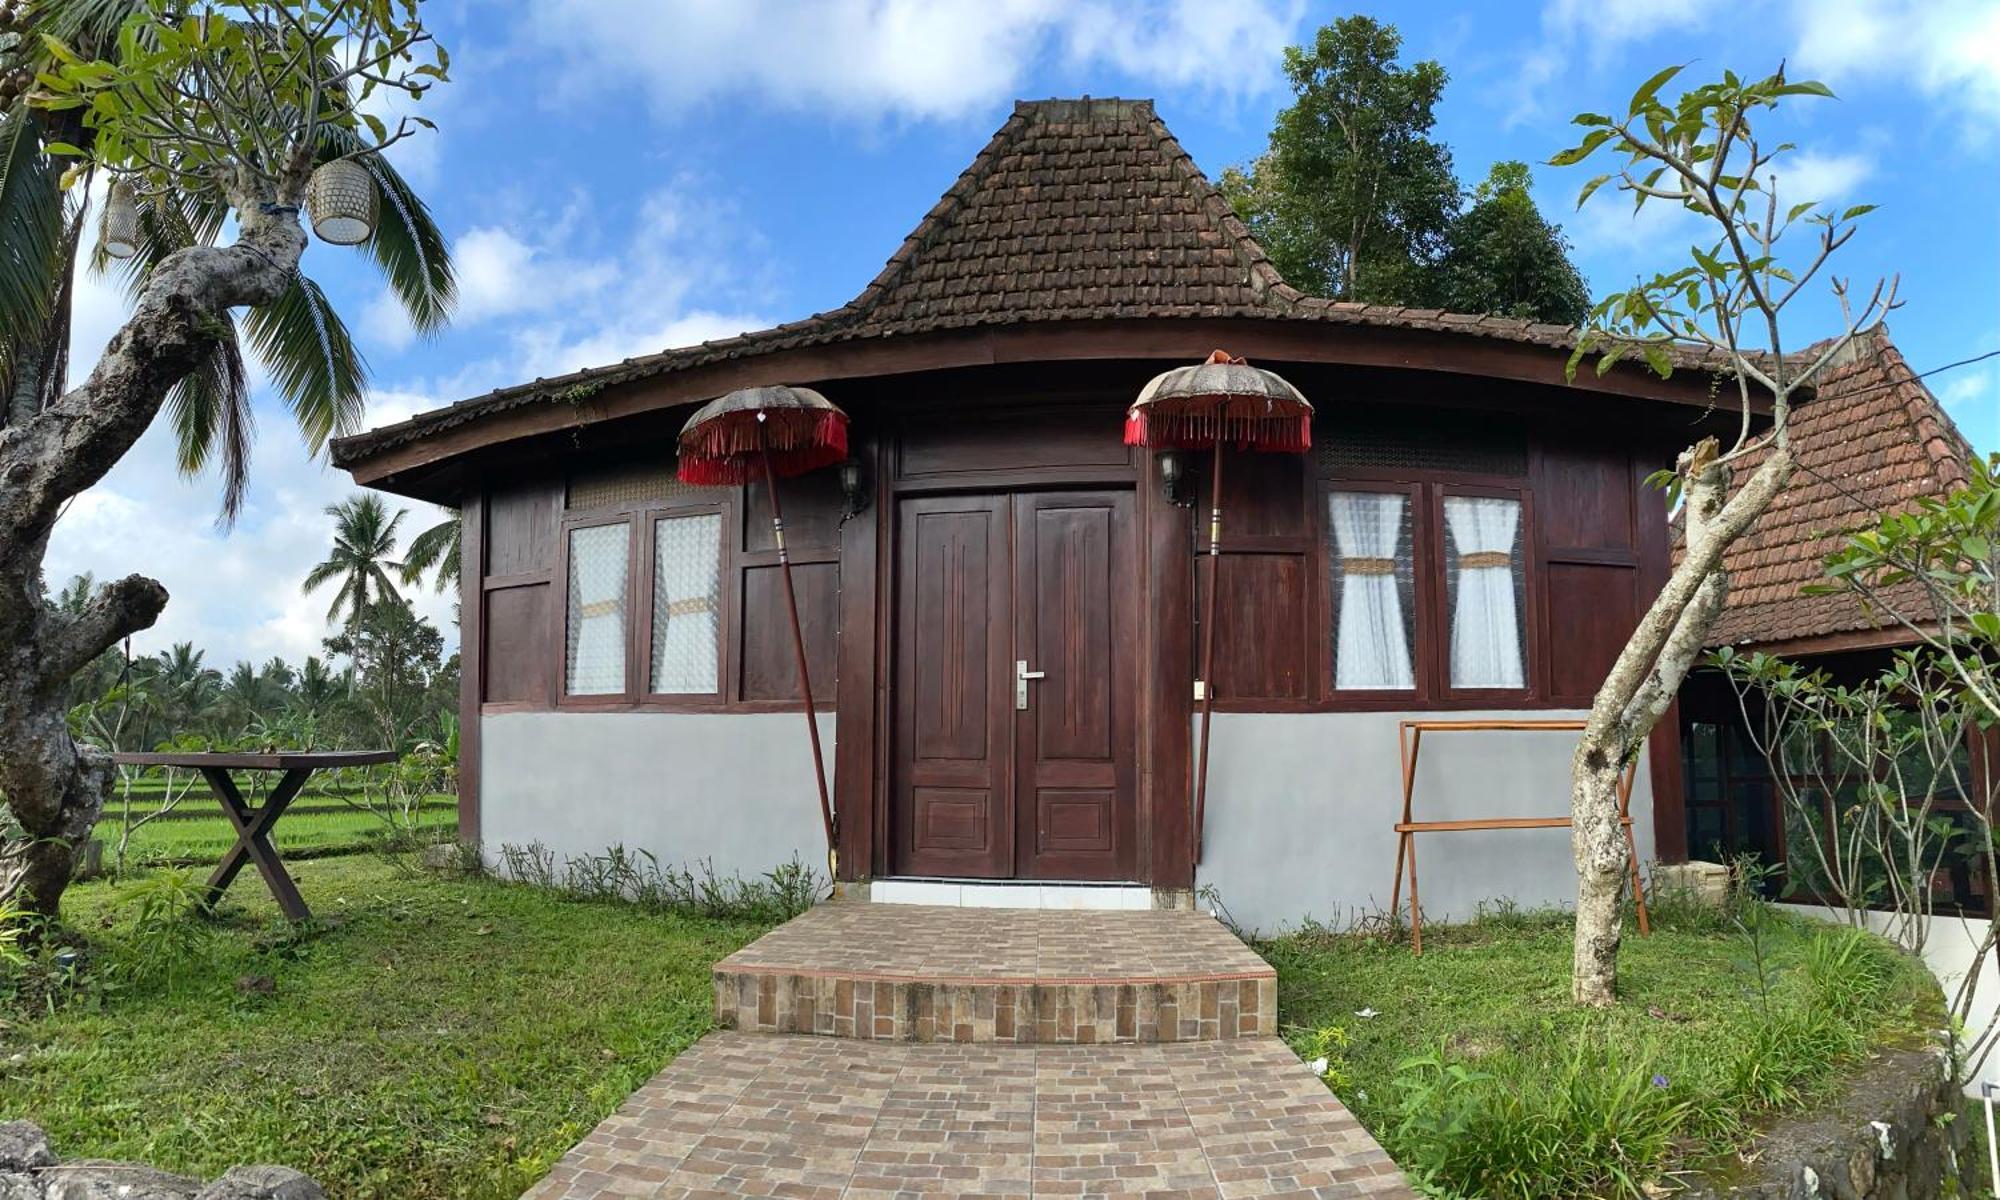 Villa Kampoeng Joglo Ijen à Banyuwangi  Extérieur photo